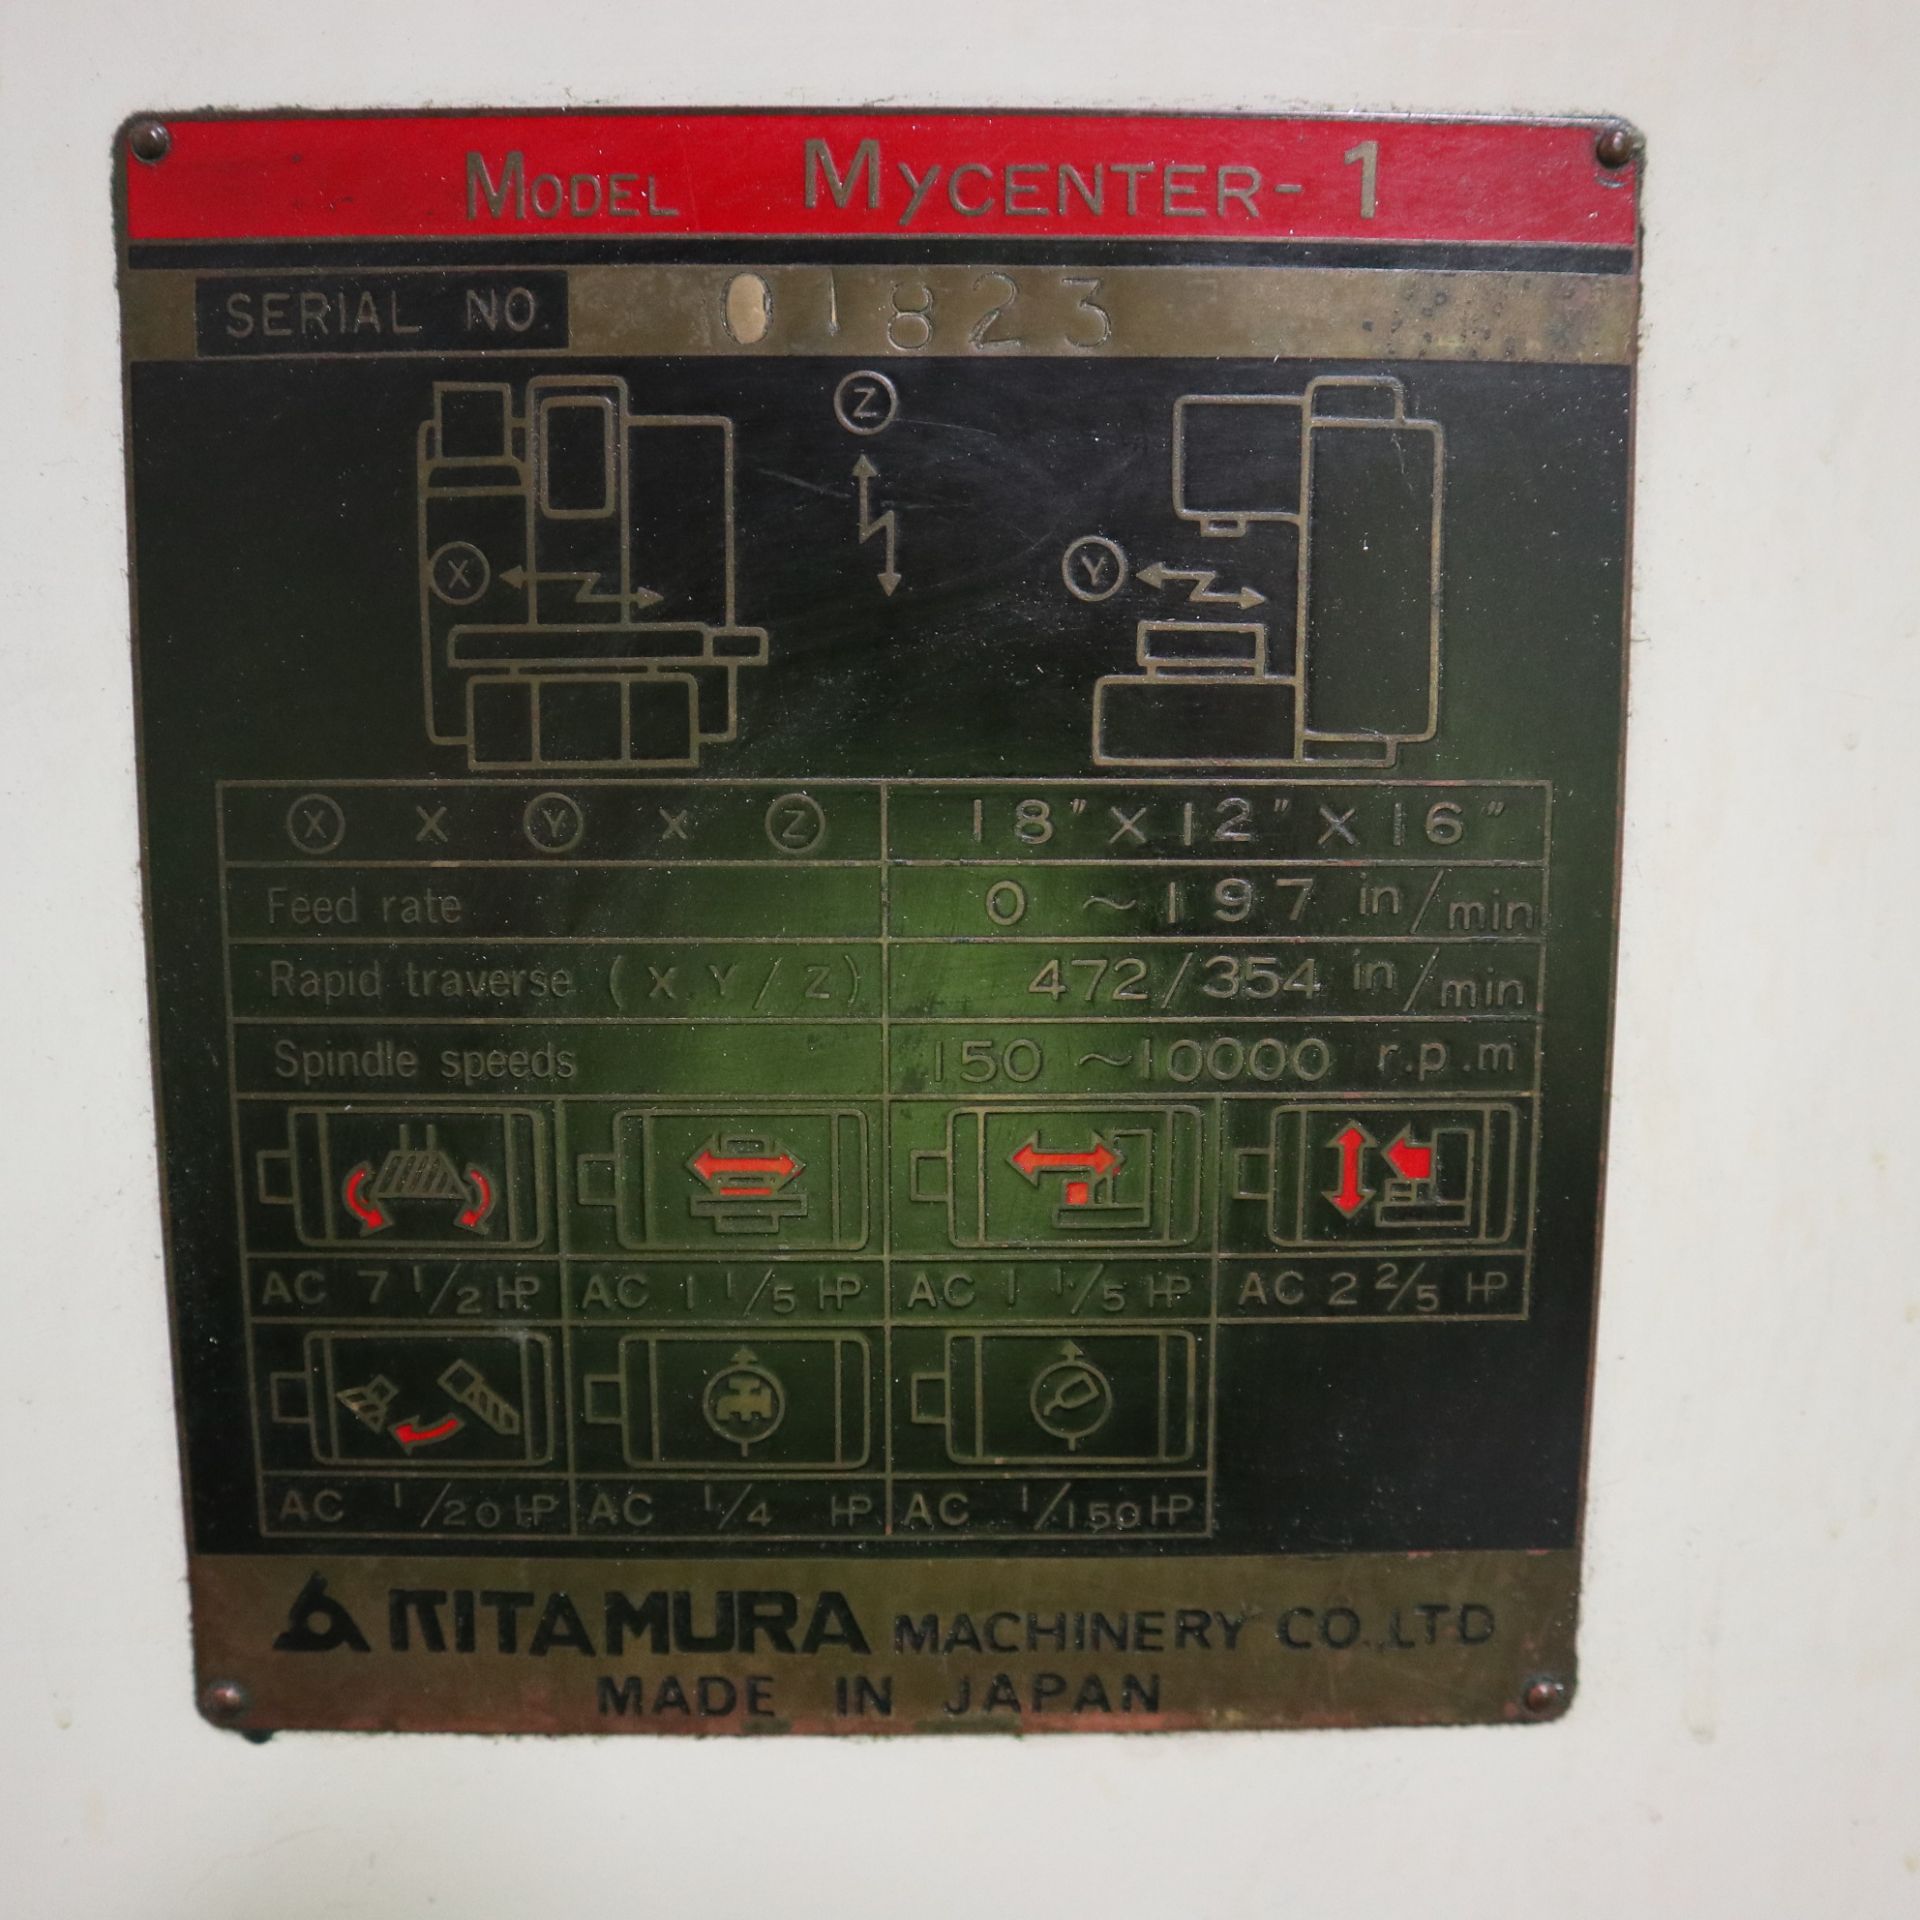 1987 KITAMURA MYCENTER-1 VERTICAL MACHINING CENTER, S/N 01823, FANUC 10M CONTROL, BT35 TOOLING,10, - Image 12 of 13